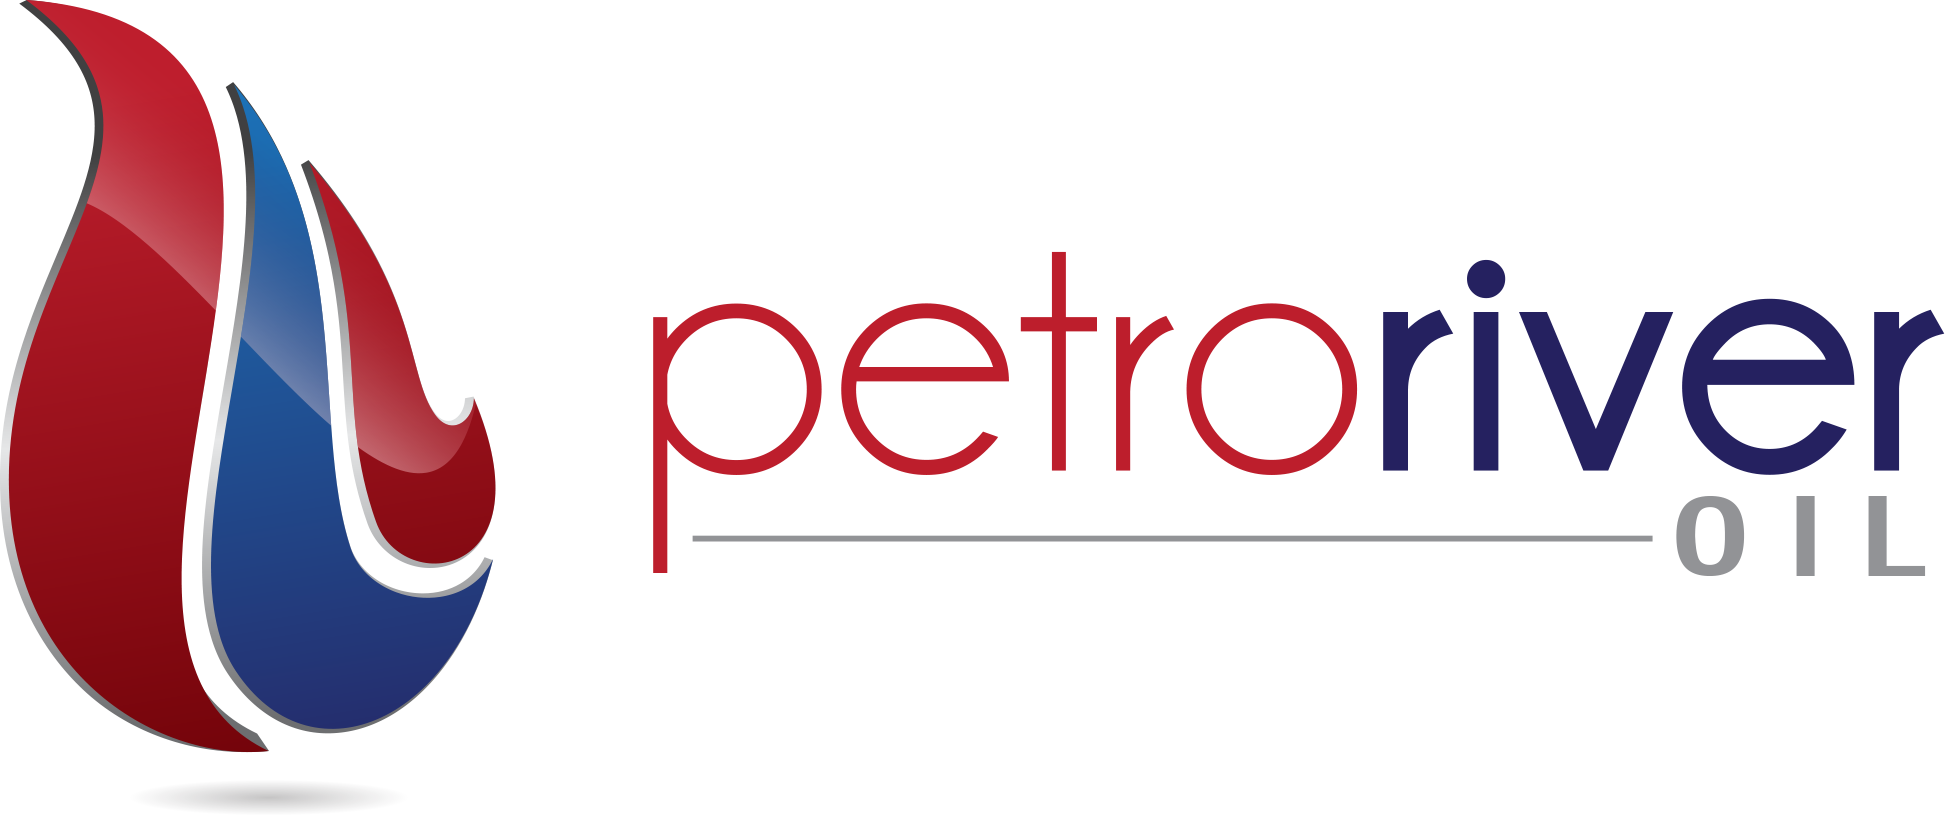 Petrologo2 - New Pepsi Logo 2017 (1945x815)